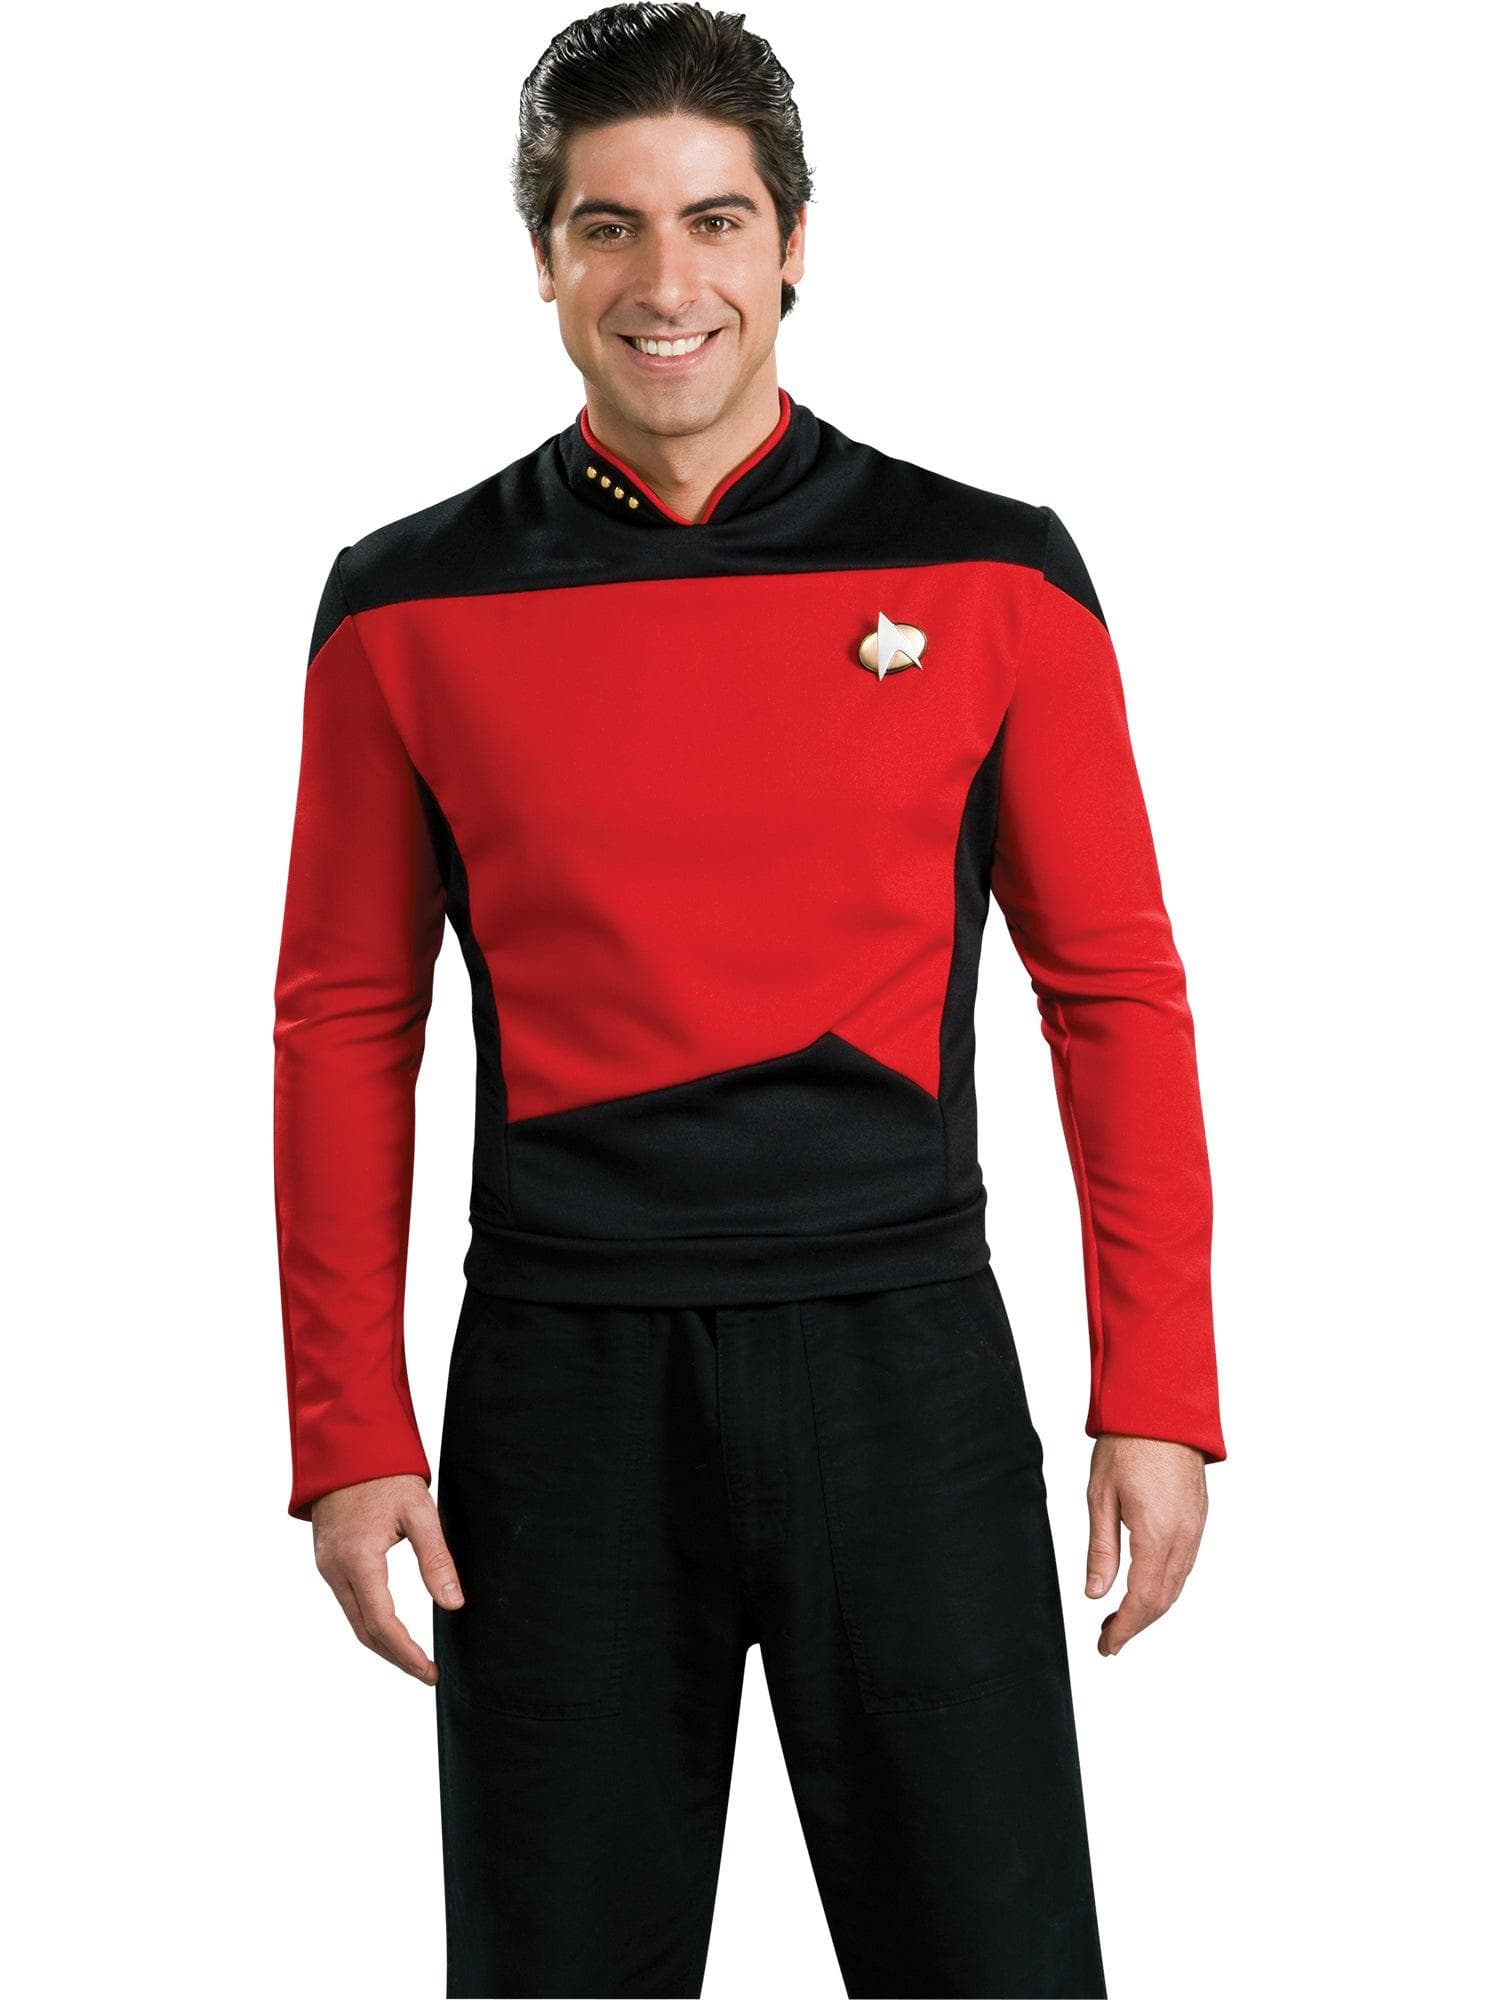 Men's Star Trek: The Next Generation Captain Picard Costume - Deluxe - costumes.com